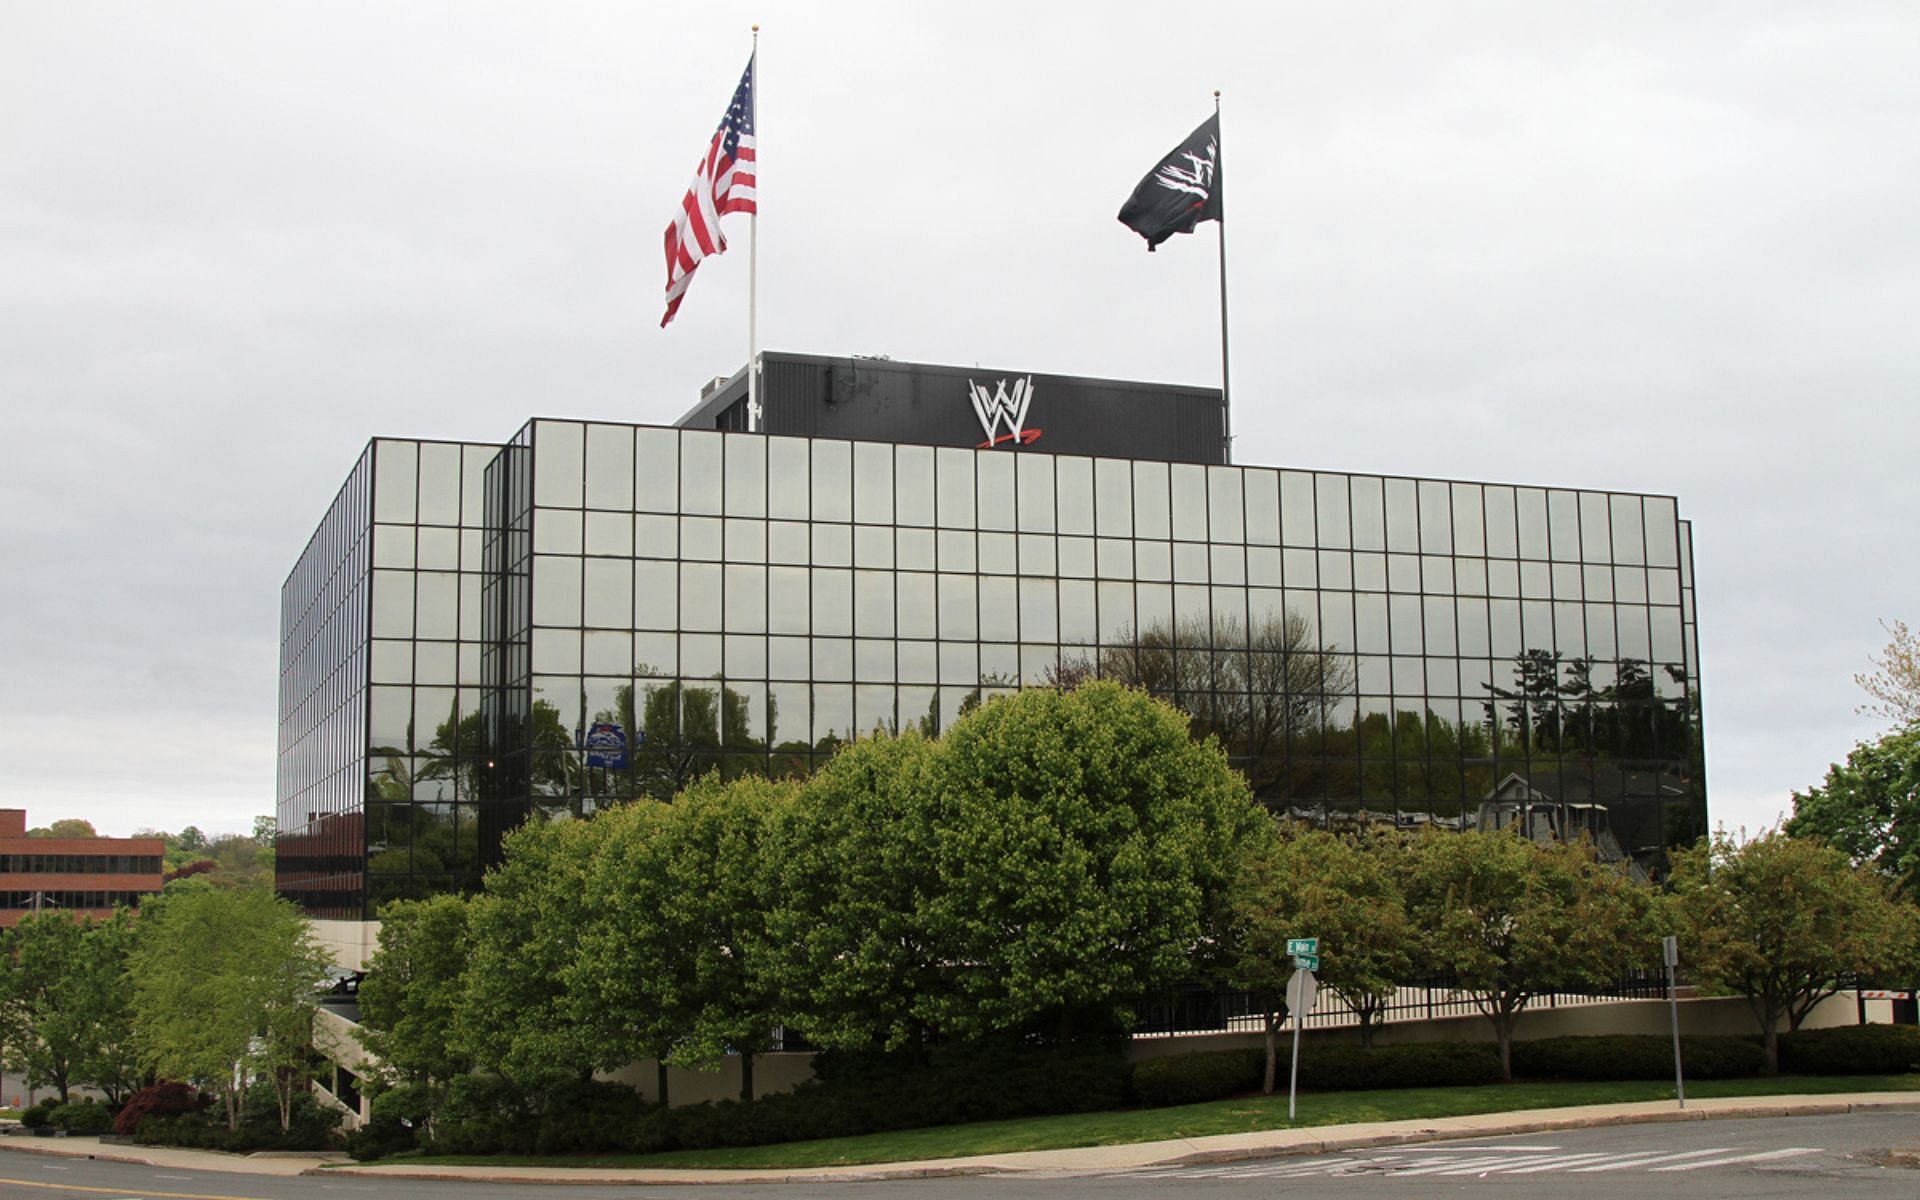 Former WWE Writer details negative working environment